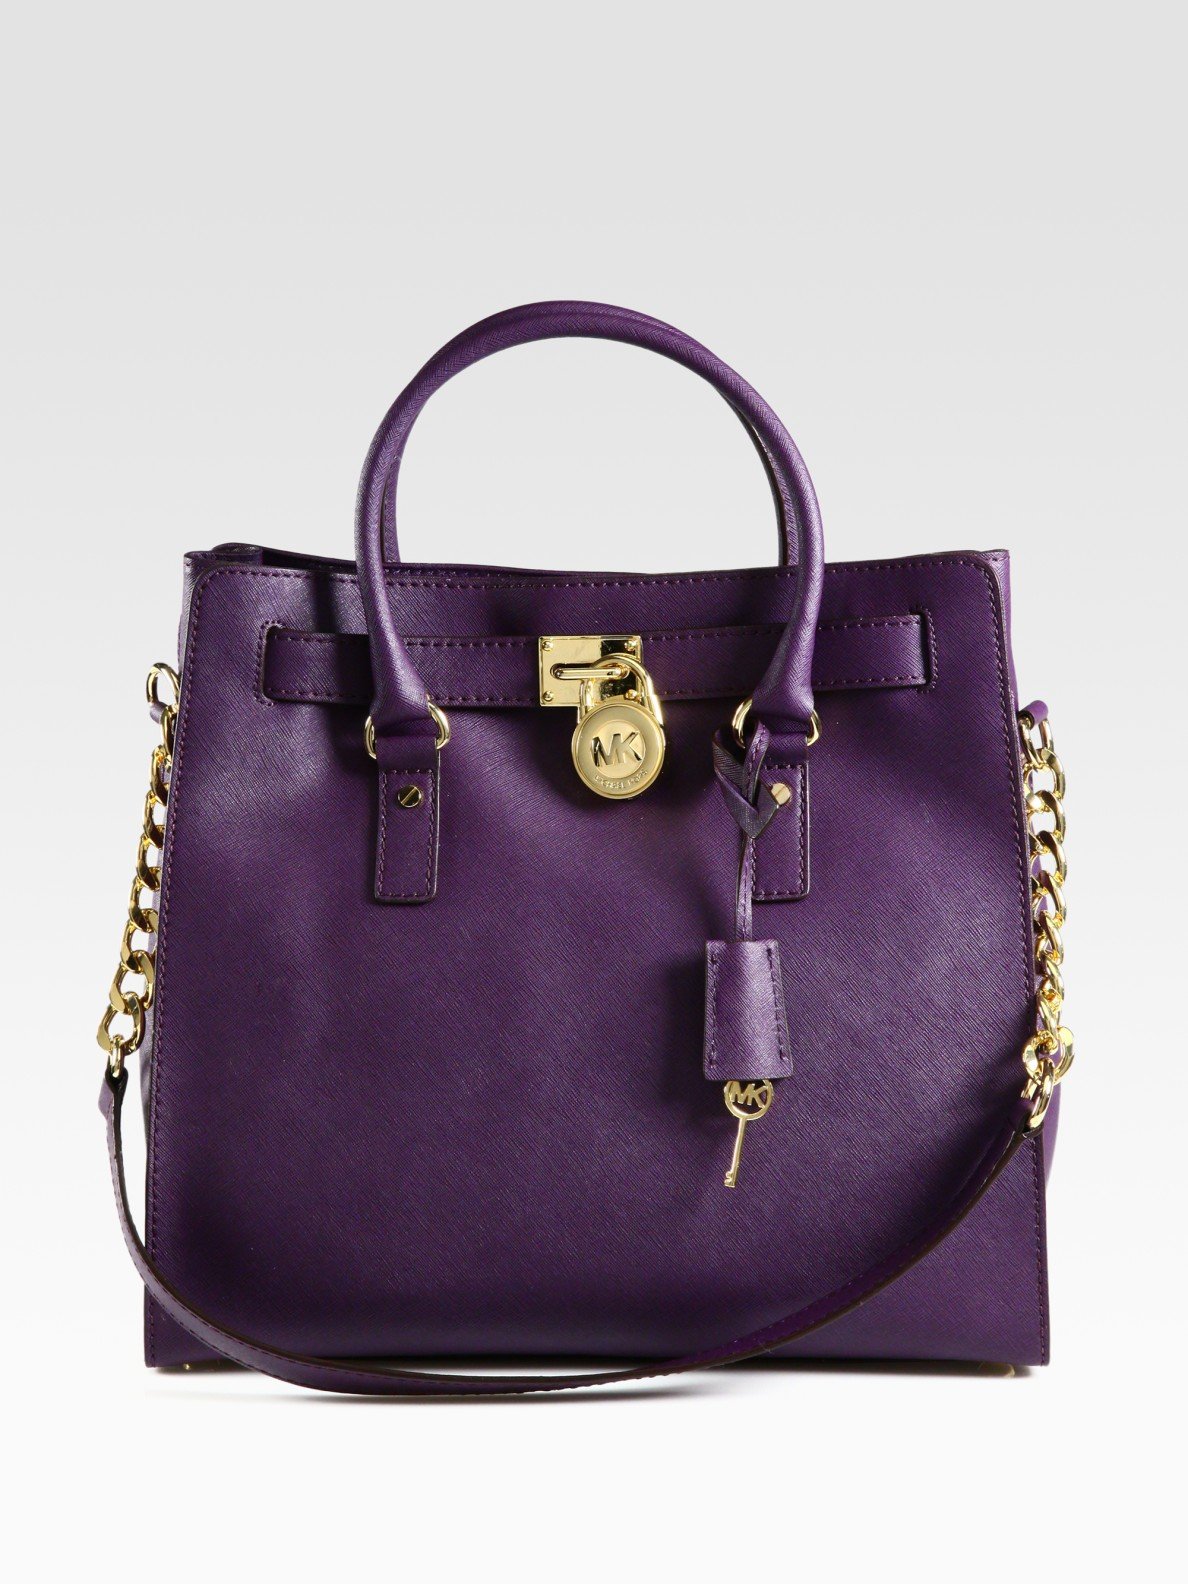 Michael Kors Handbags Purple | The Art of Mike Mignola